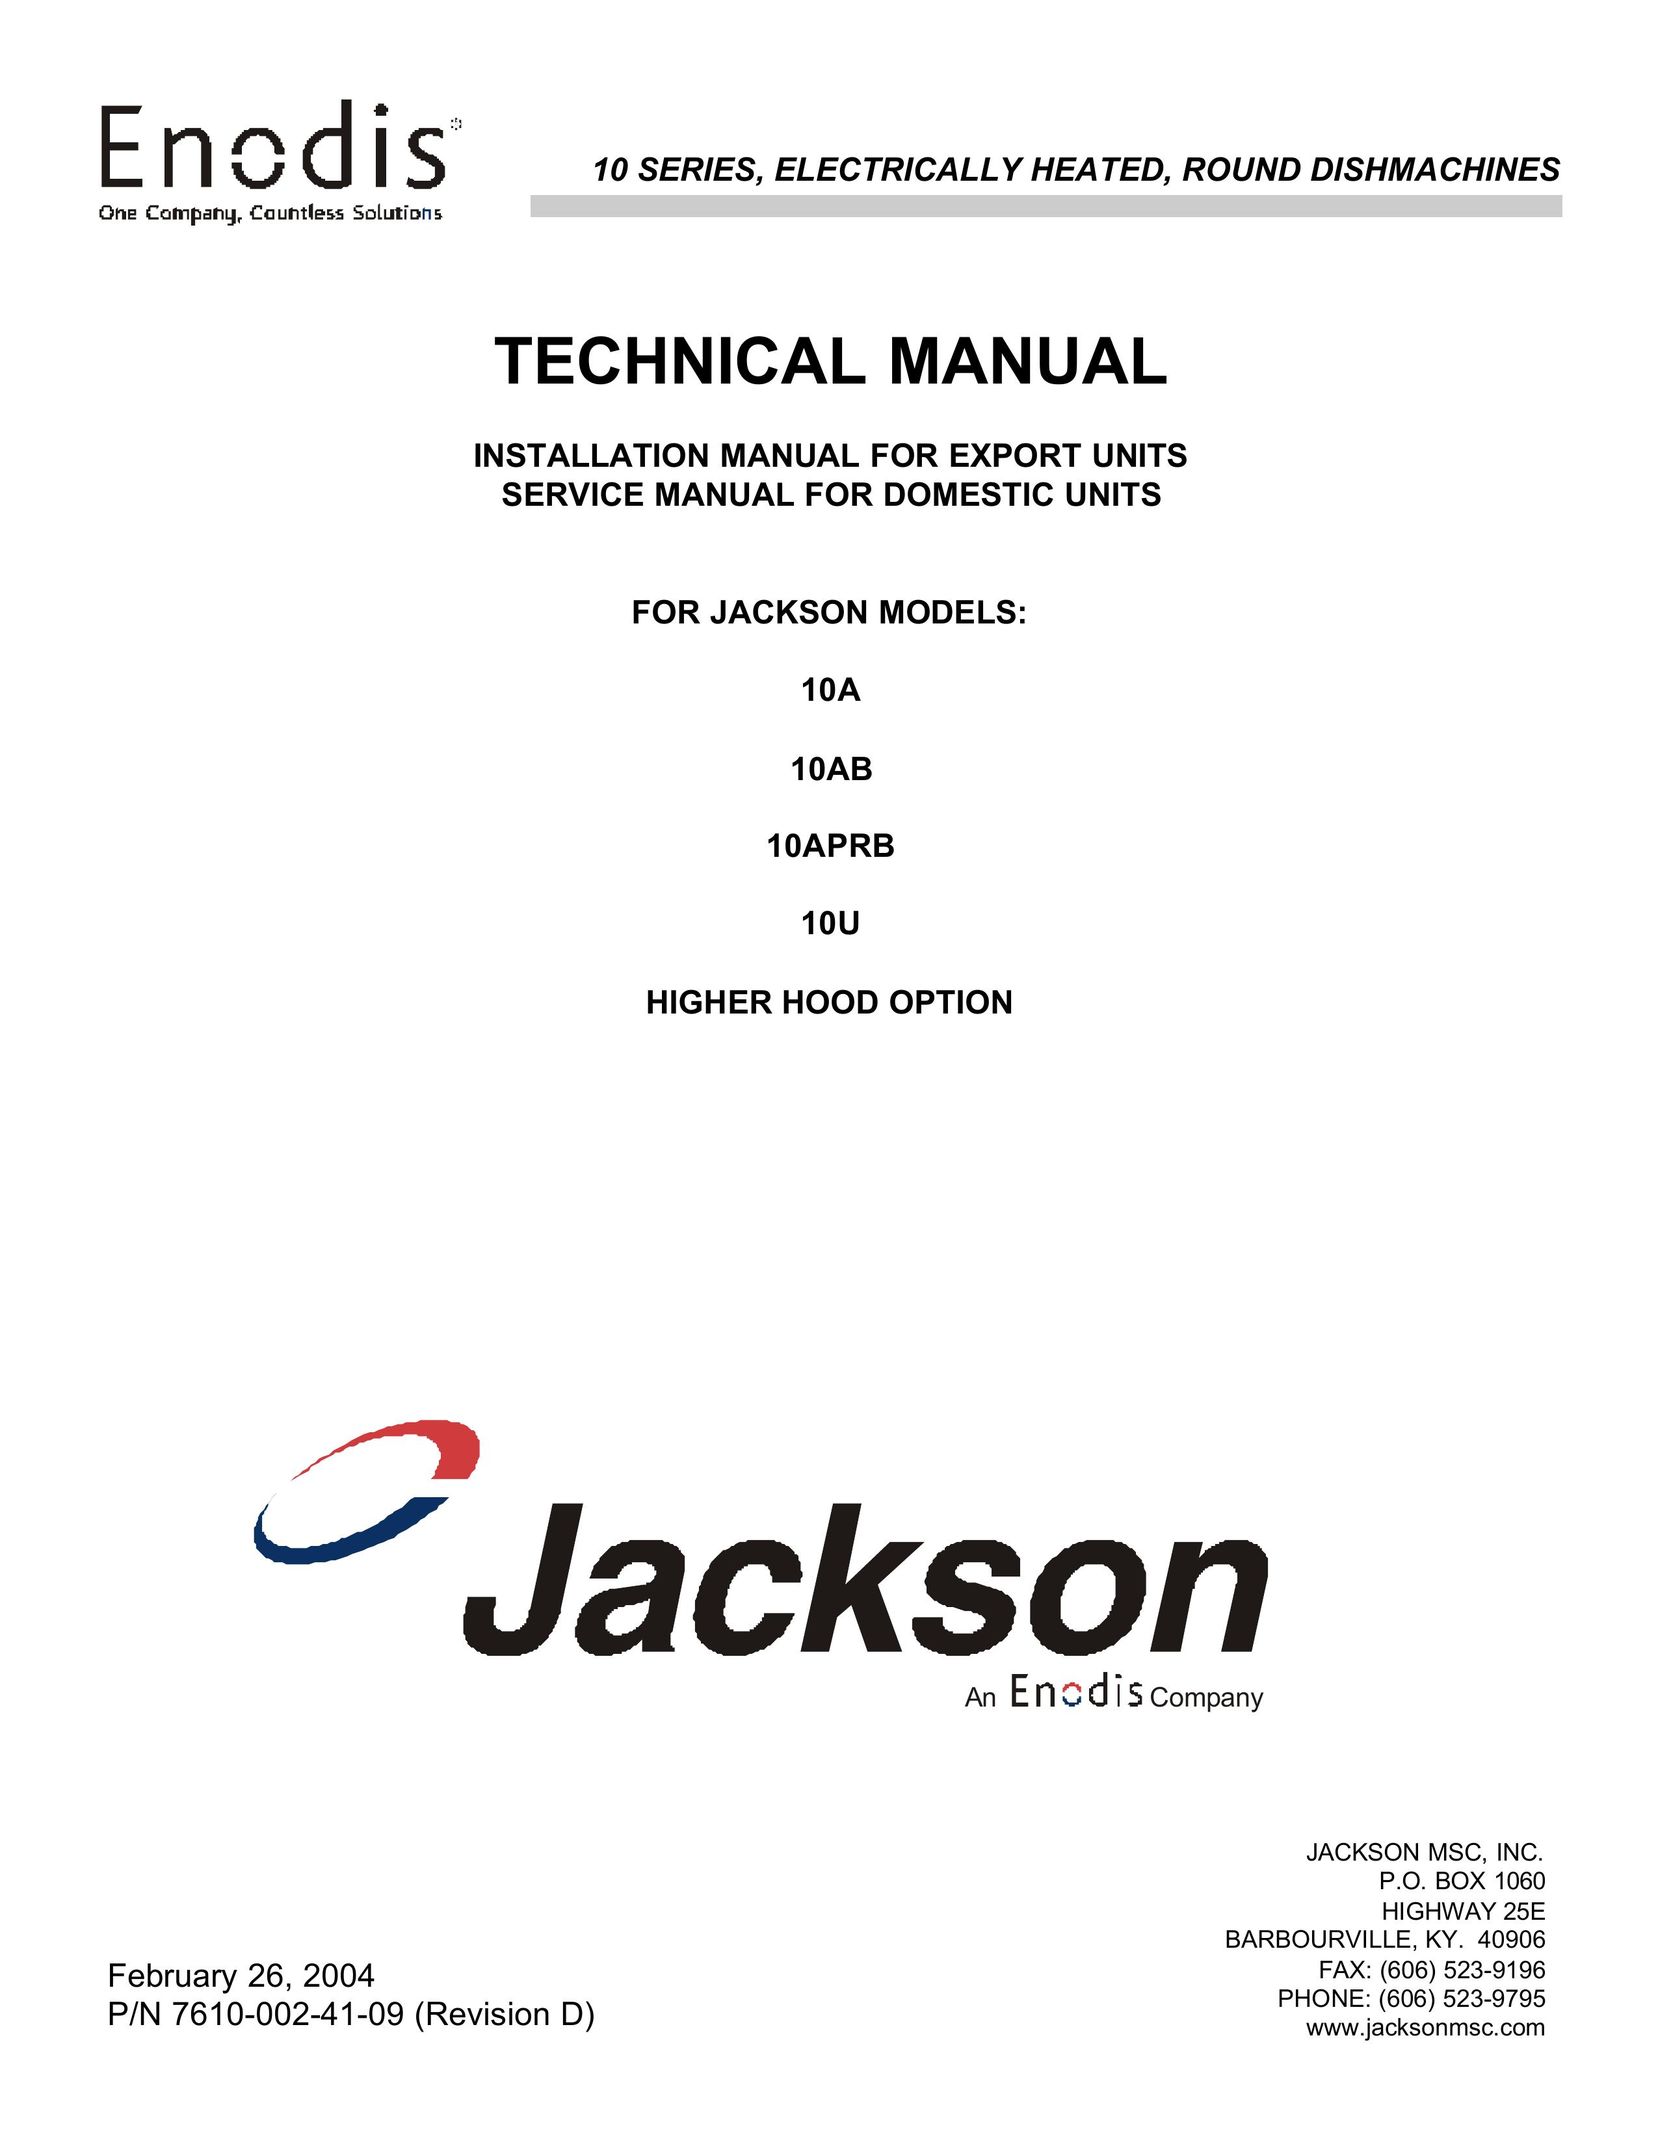 Jackson 10AB Dishwasher User Manual